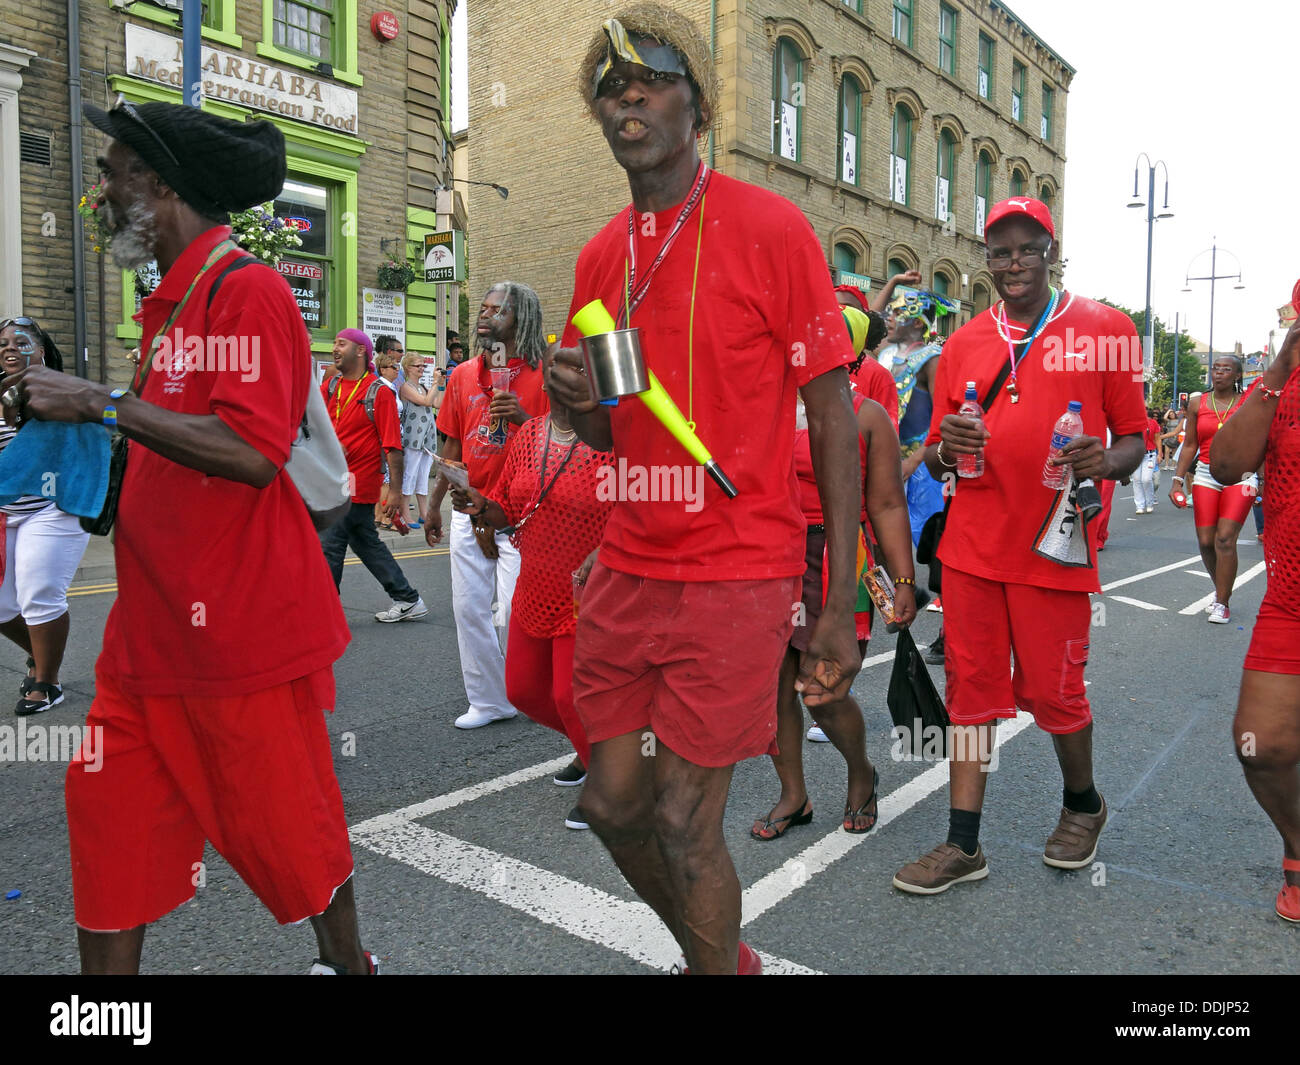 Kostümierte Tänzer aus Huddersfield Karneval 2013 Afrika Karibik Parade Straßenfest Stockfoto